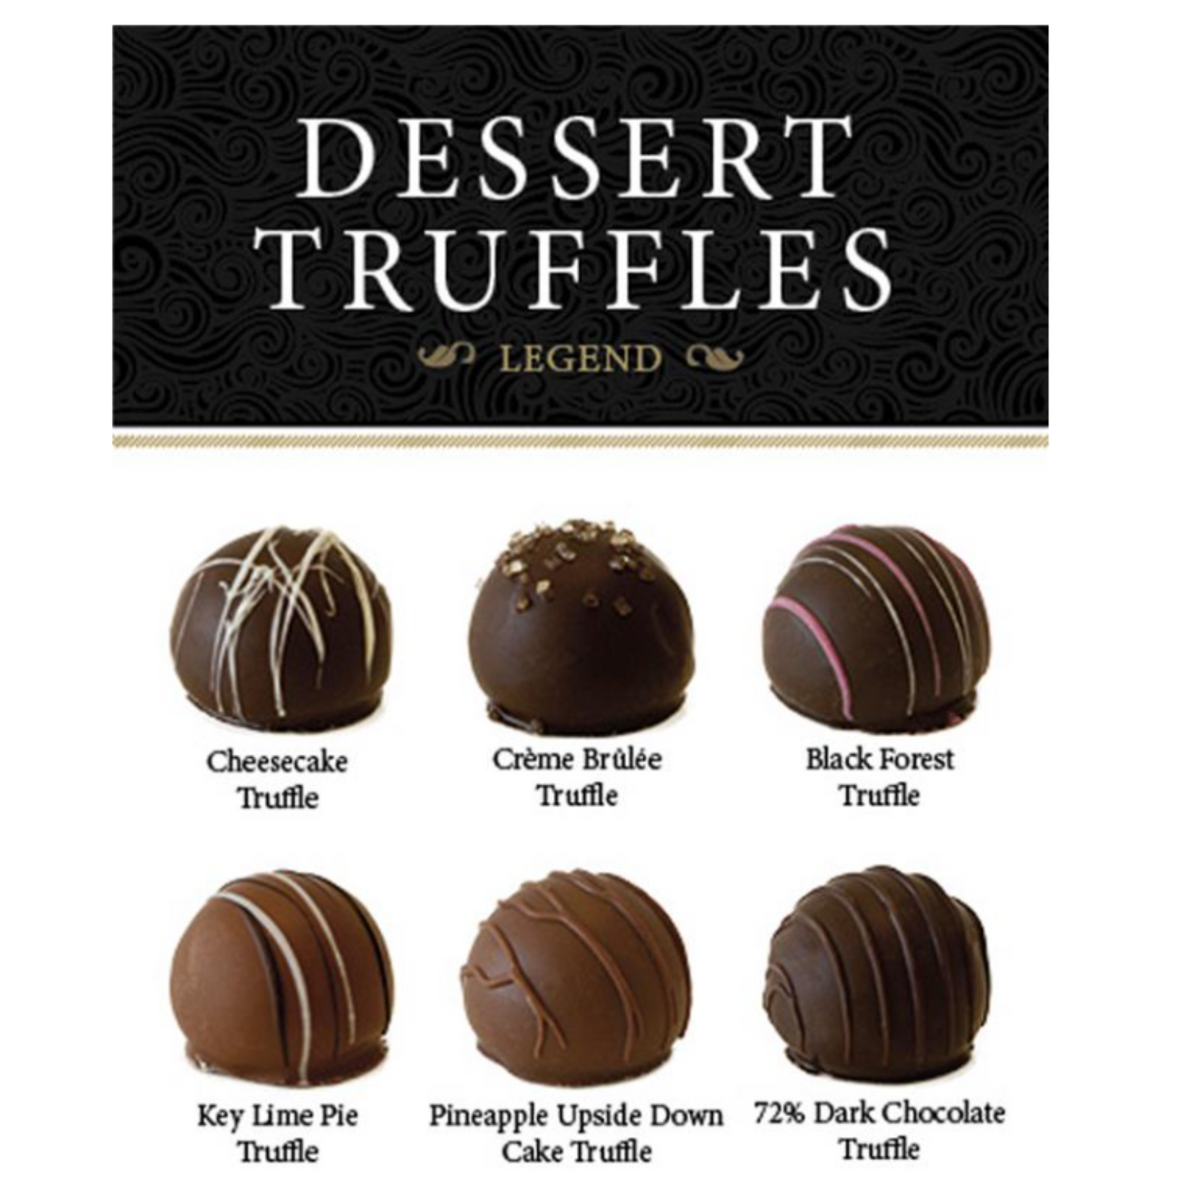 Dessert Truffle Box